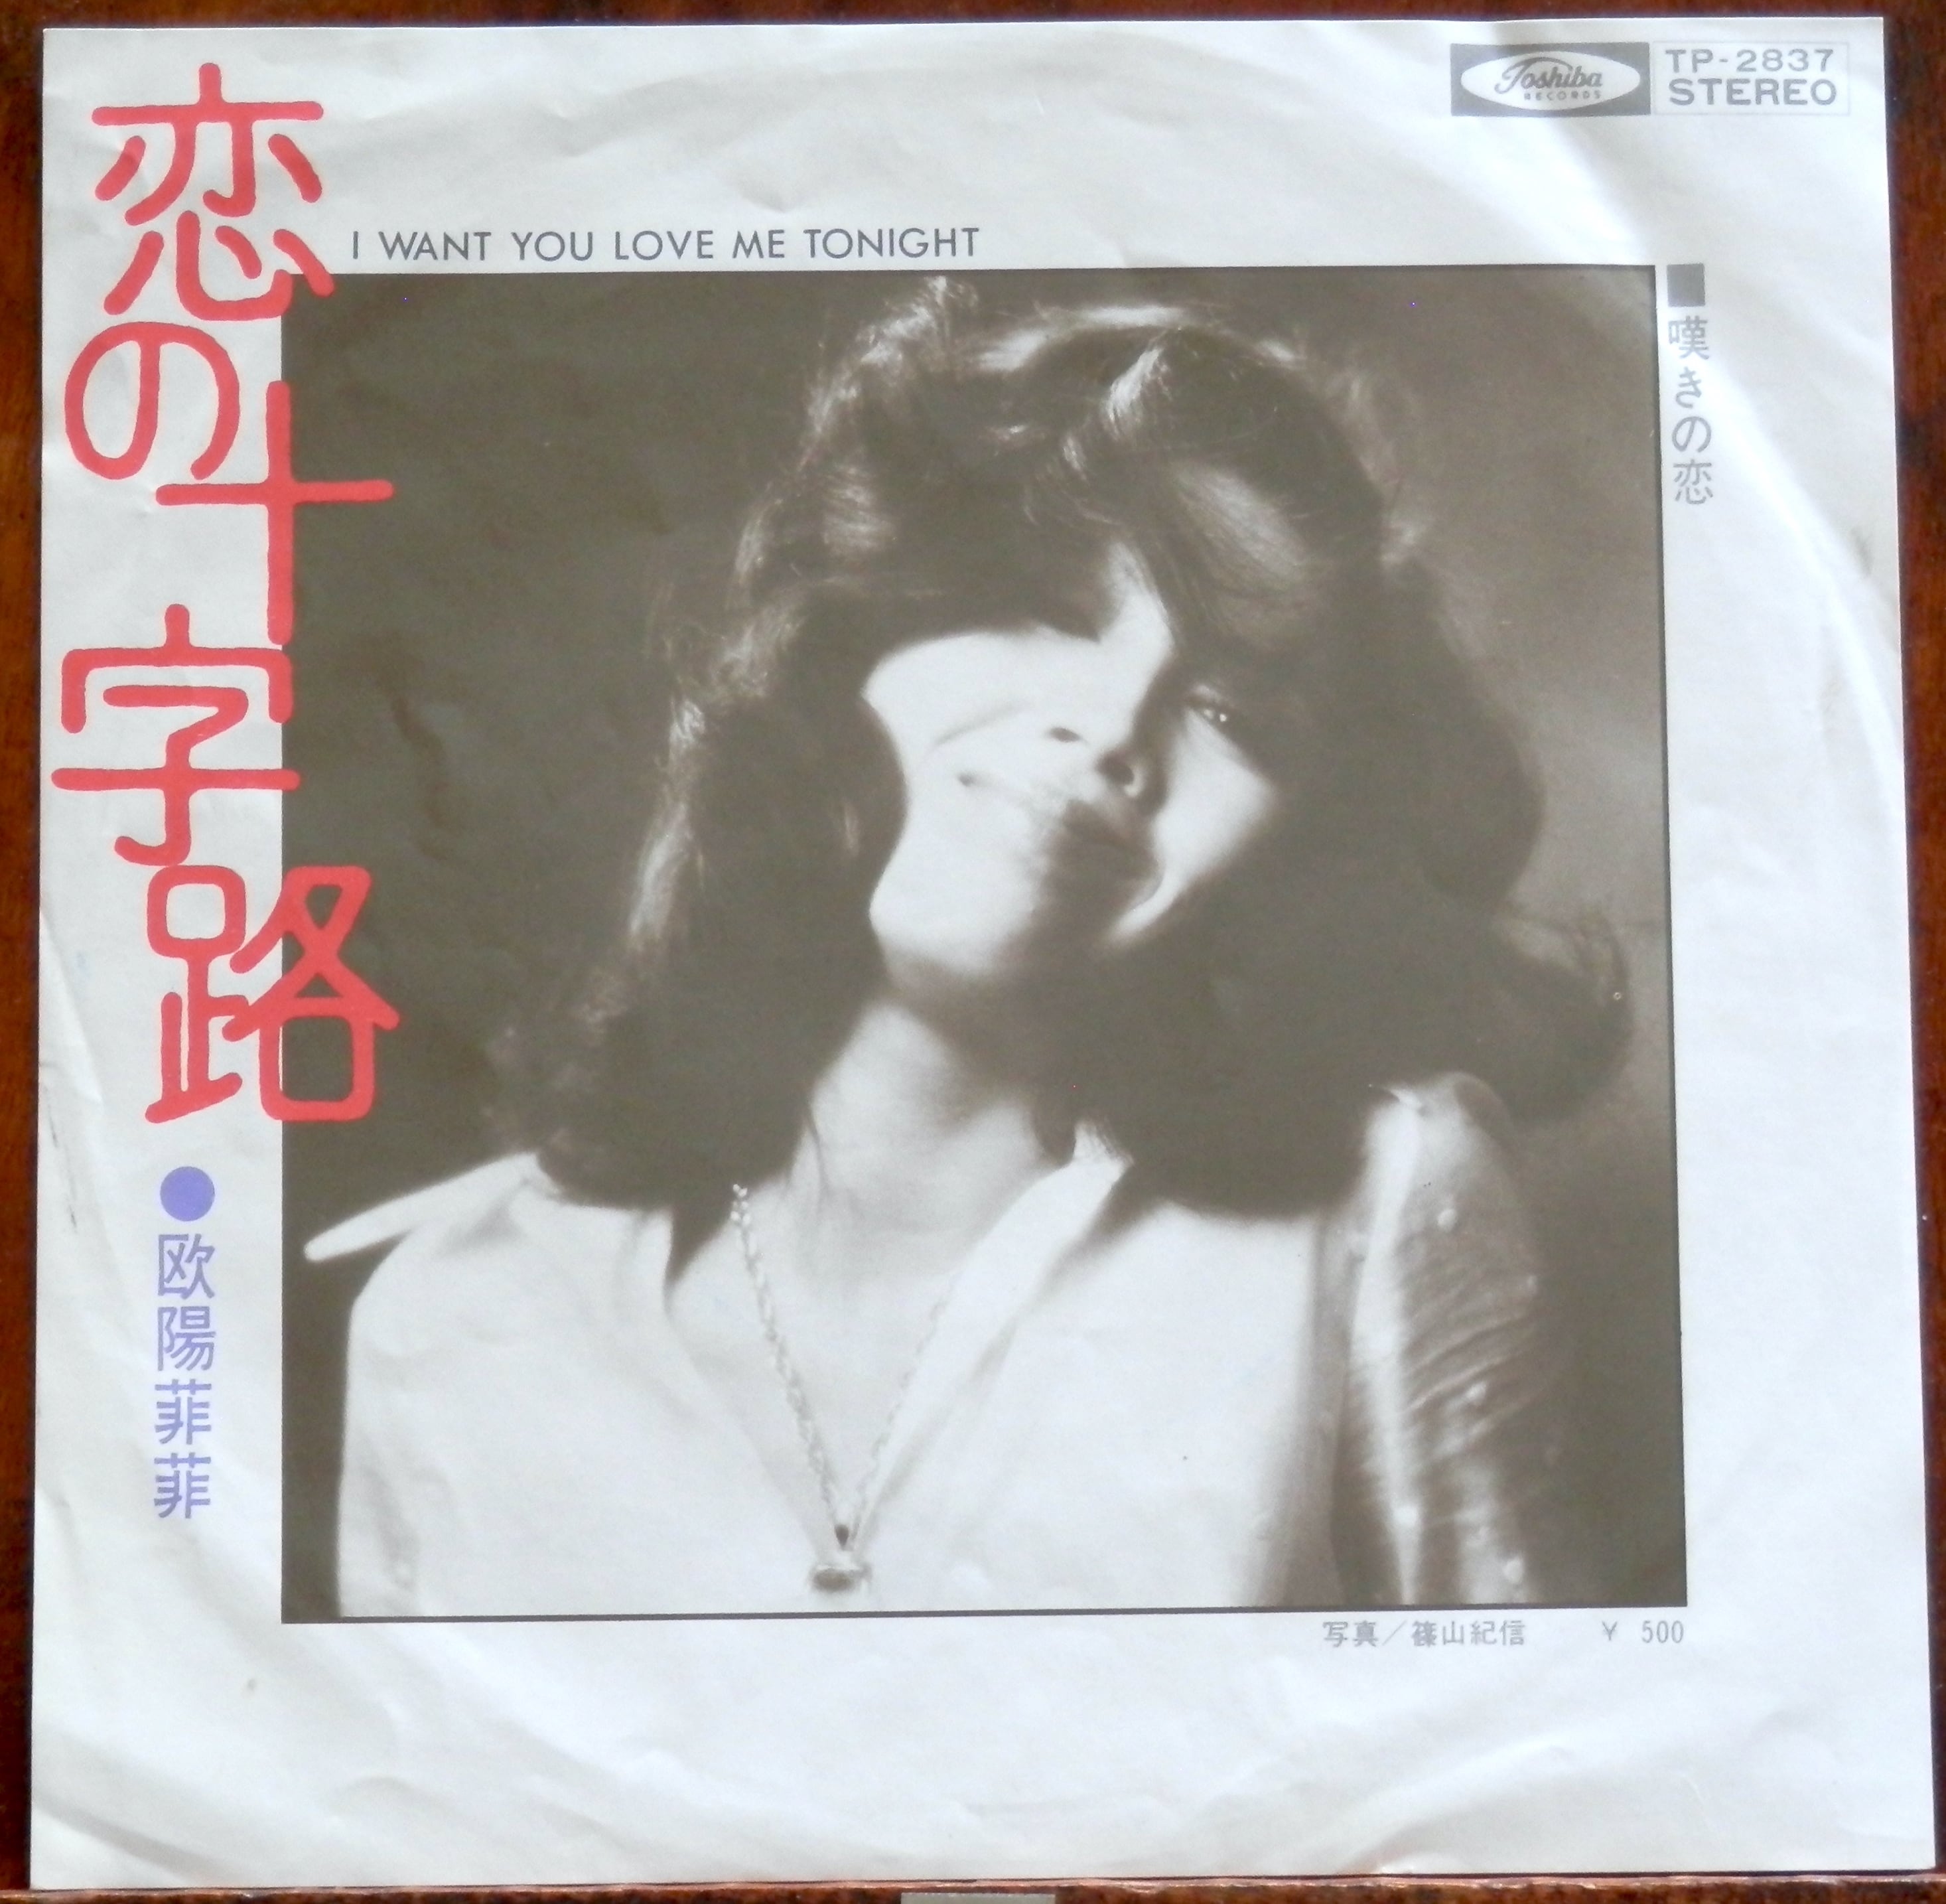 75【EP】欧陽菲菲 恋の十字路 音盤窟レコード